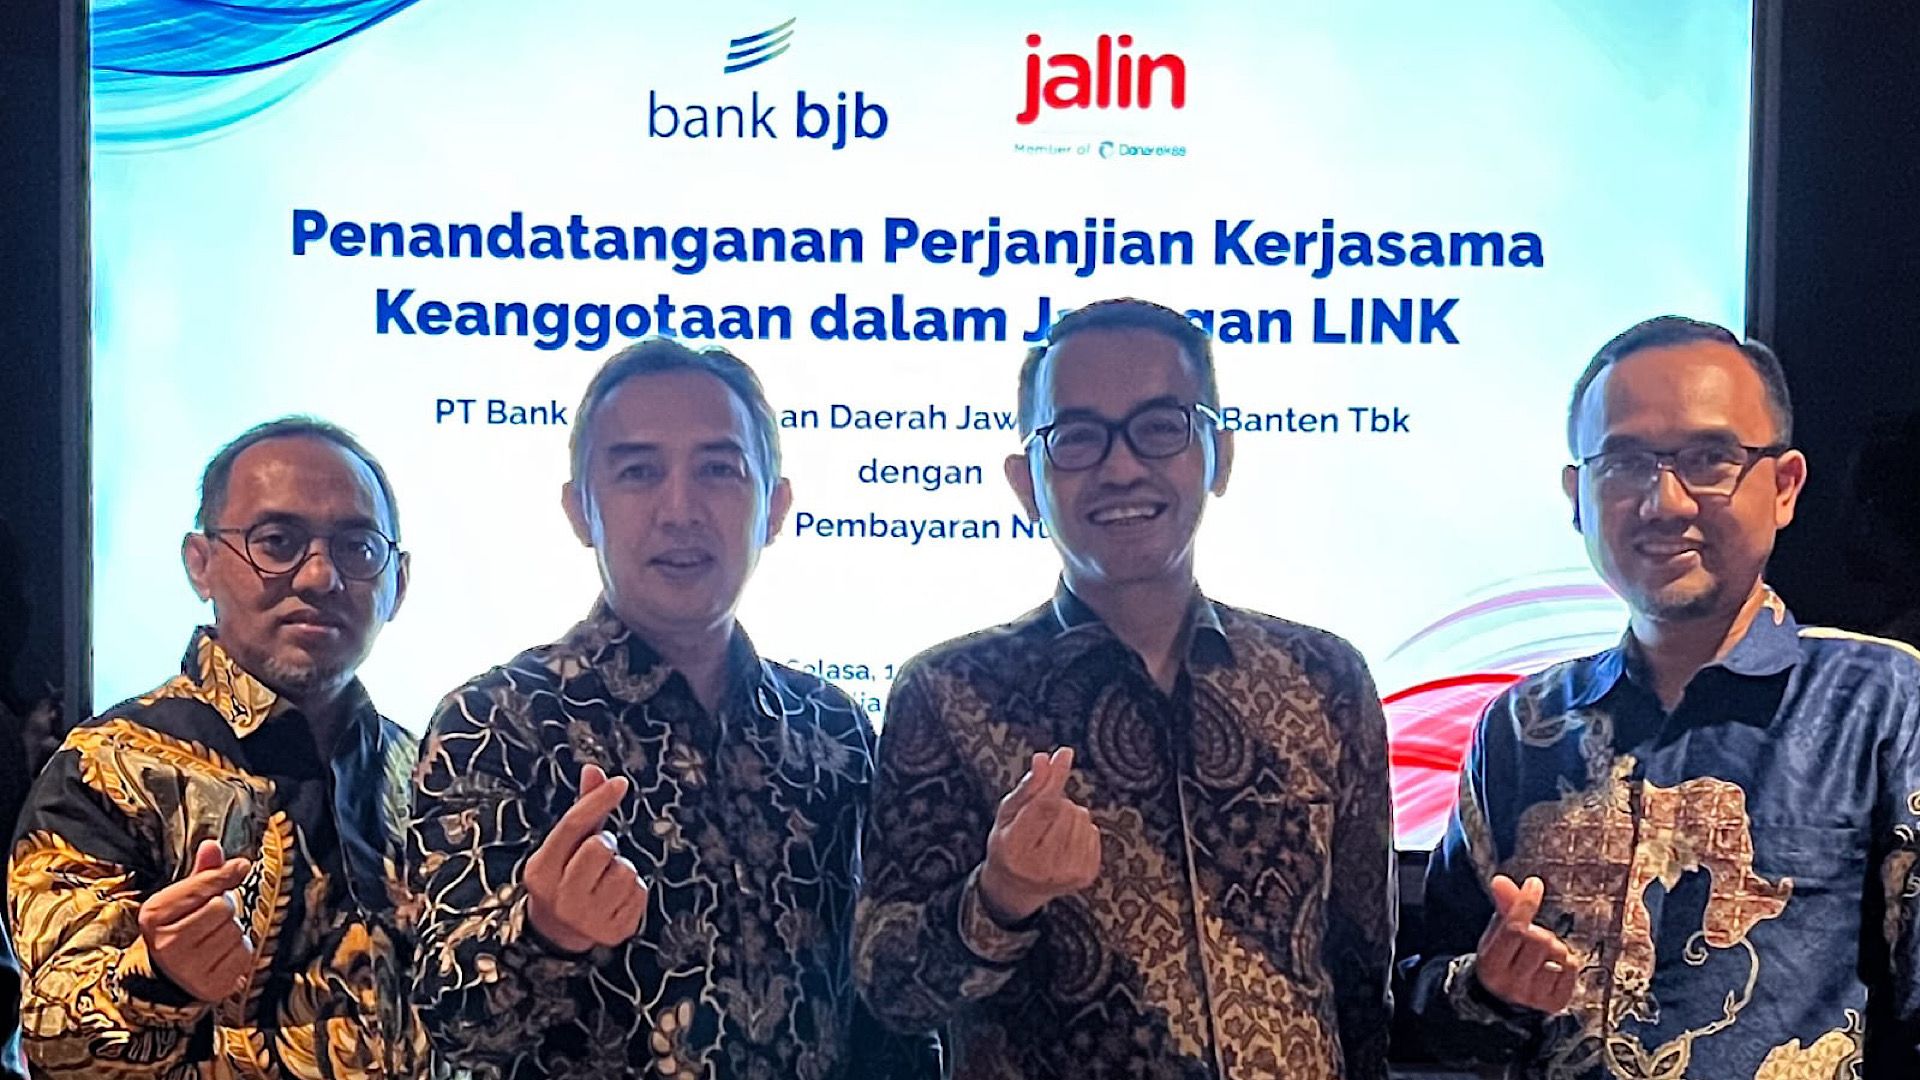 Bank bjb dengan Jalin berkolaborasi untuk mendorong inklusi keuangan nasional melalui digitalisasi.